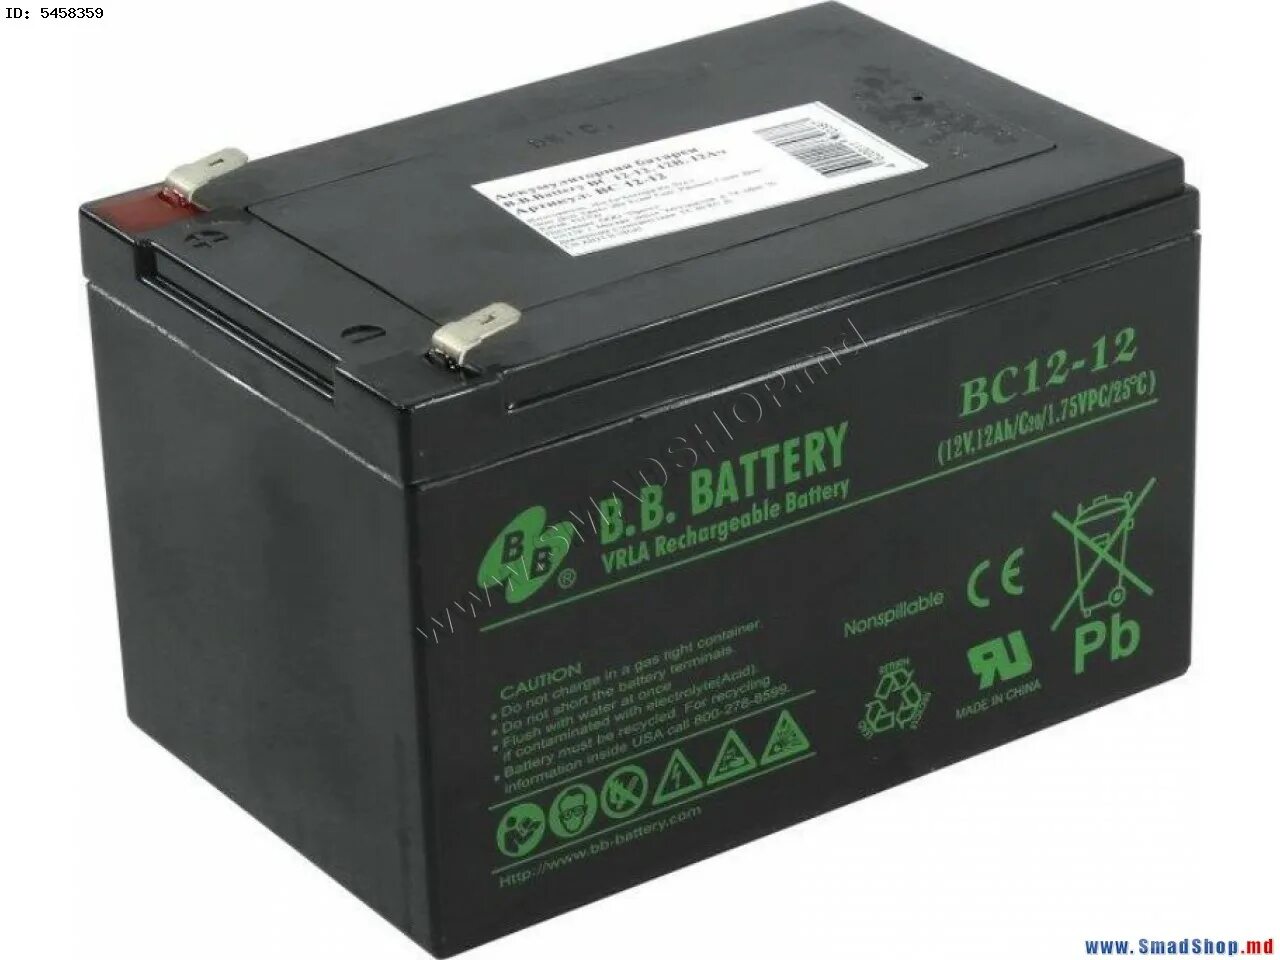 B b battery. Батарея для ups 12v 5ah. BB Battery bc12-12. Аккумулятор b.b.Battery 7.2 Ah. Аккумулятор BB Battery BC 7.2-12.